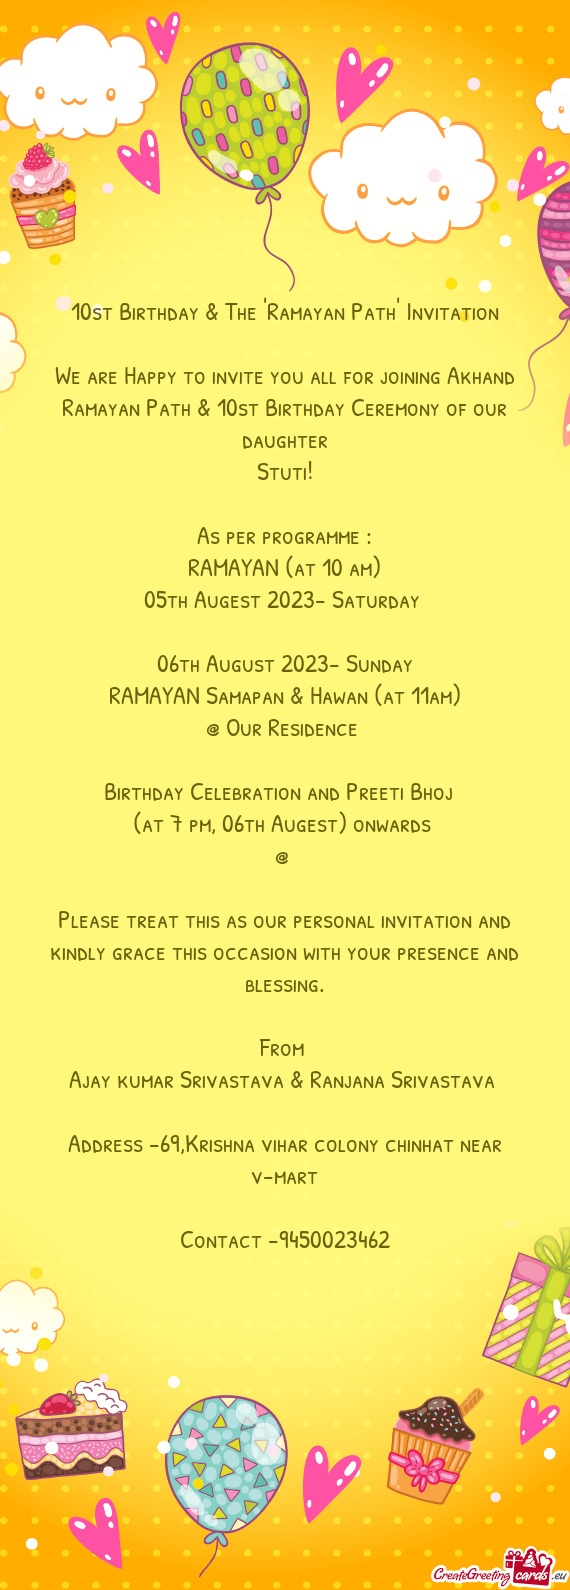 10st Birthday & The "Ramayan Path" Invitation